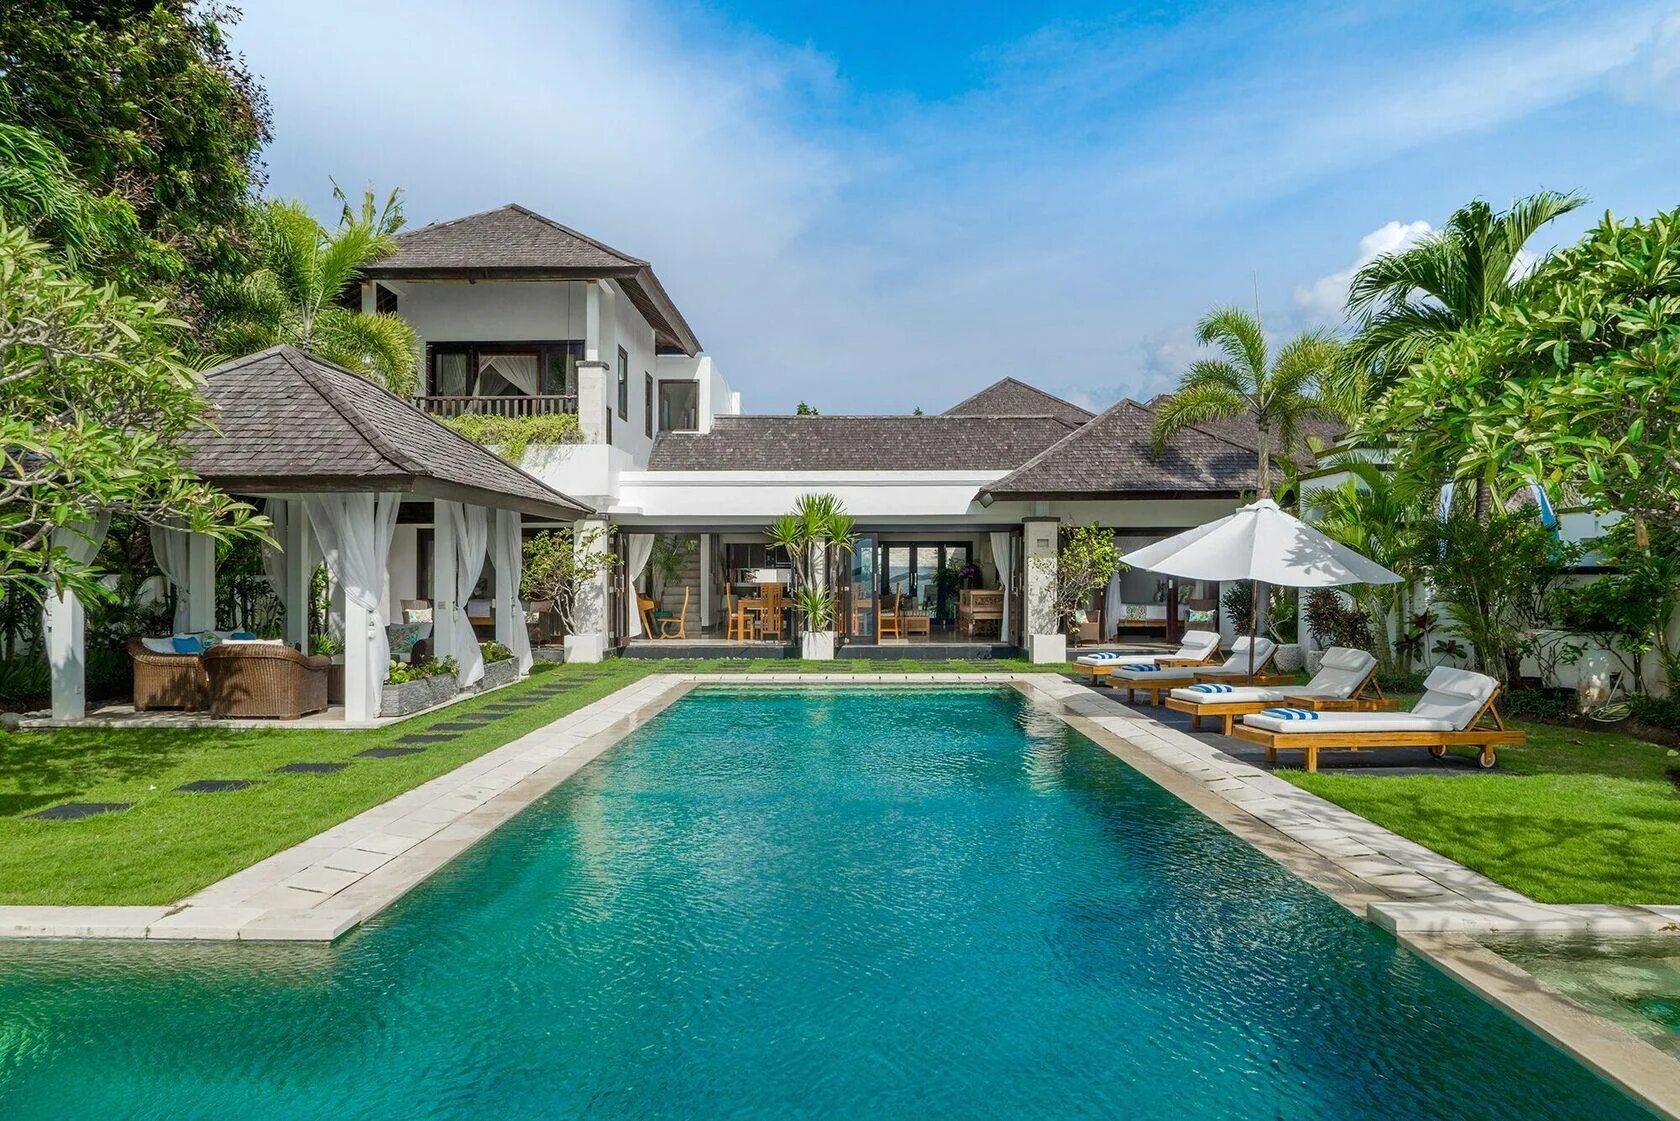 Купить дом на бали. Индонезия Бали вилла. О. Бали ( Индонезия) недвижимость. Сити вилла Бали. Белая вилла на Бали.